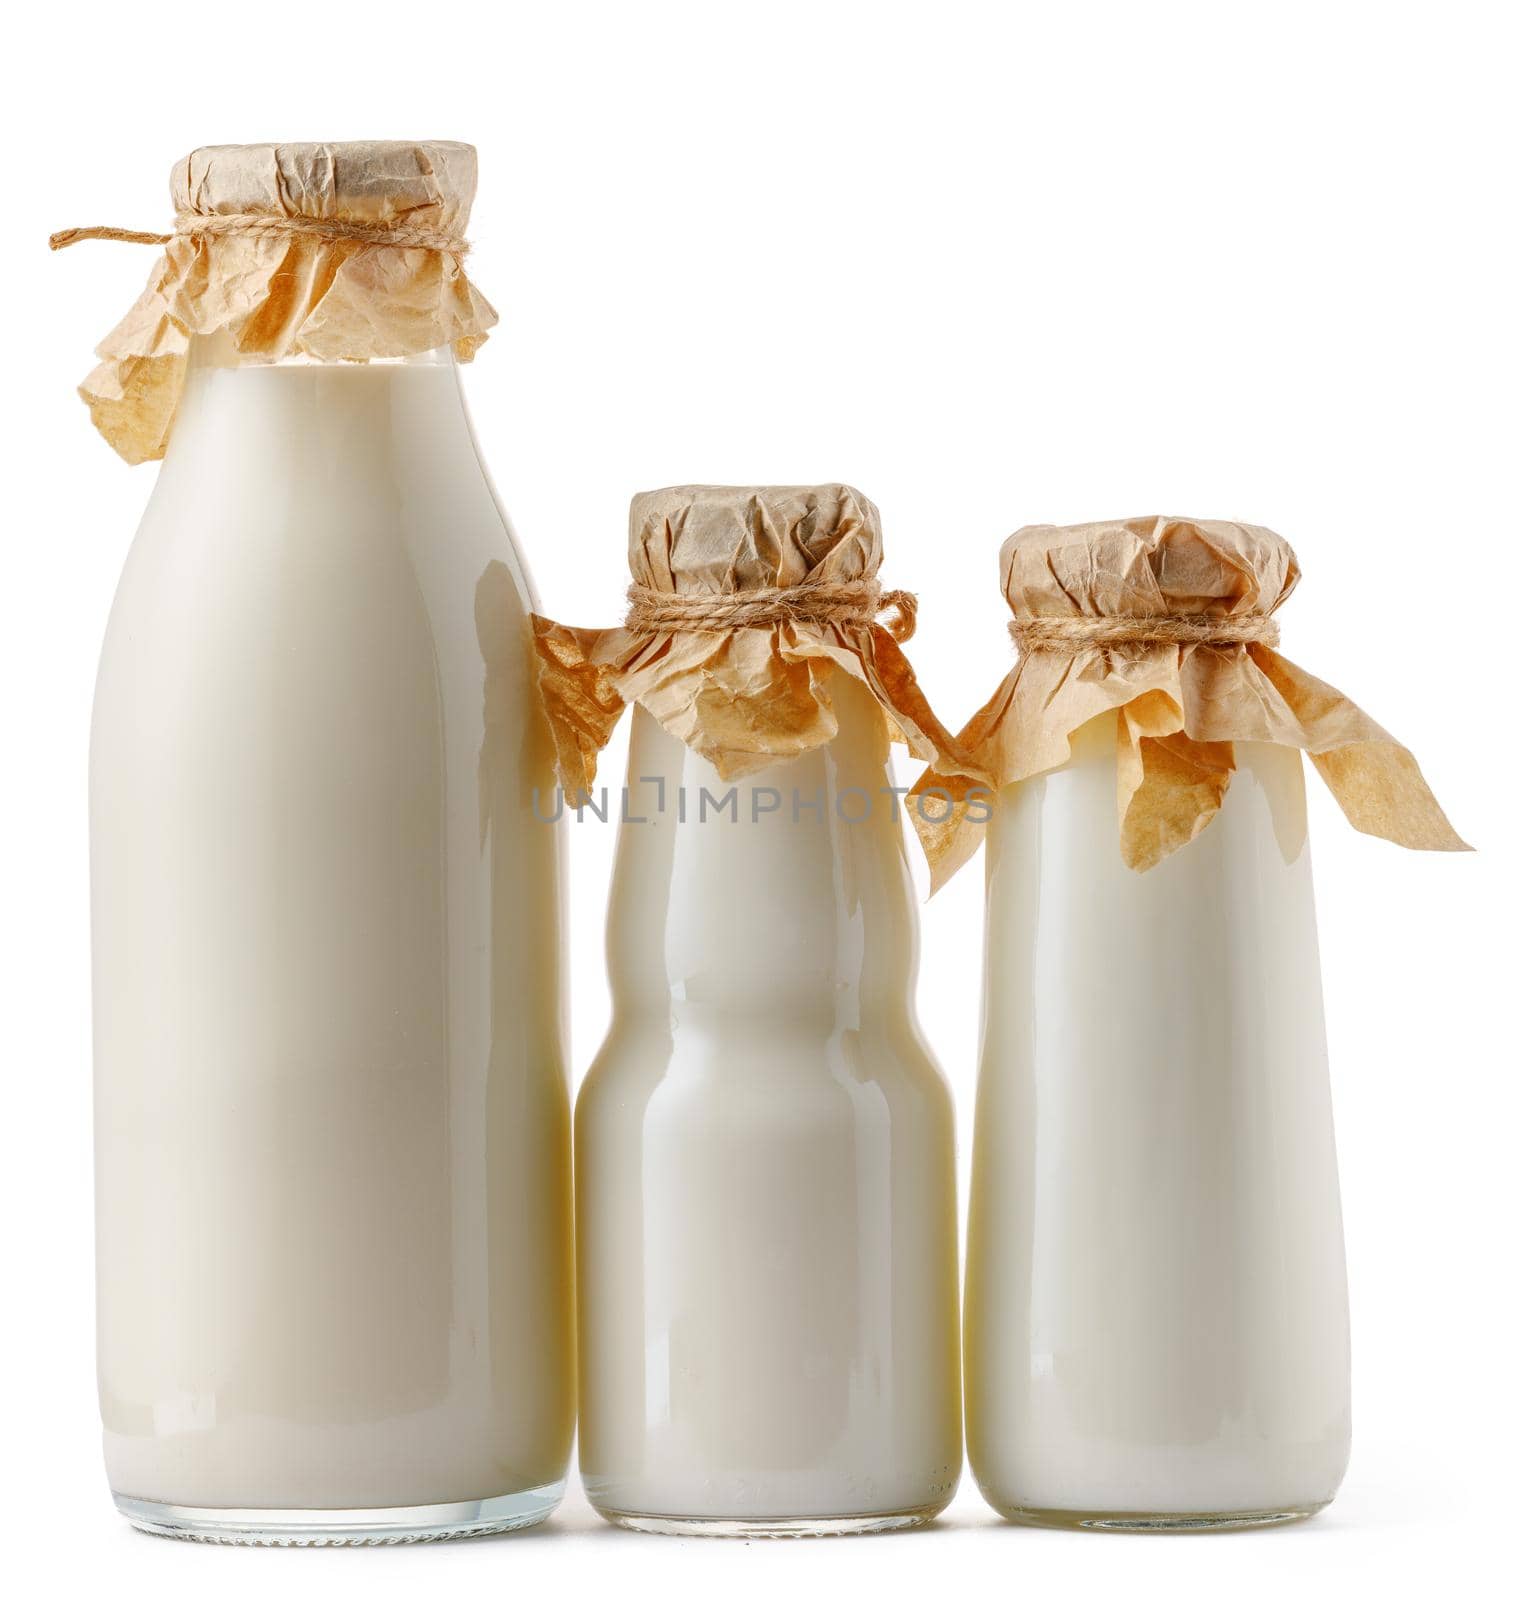 Glass milk bottle isolated on white background close up